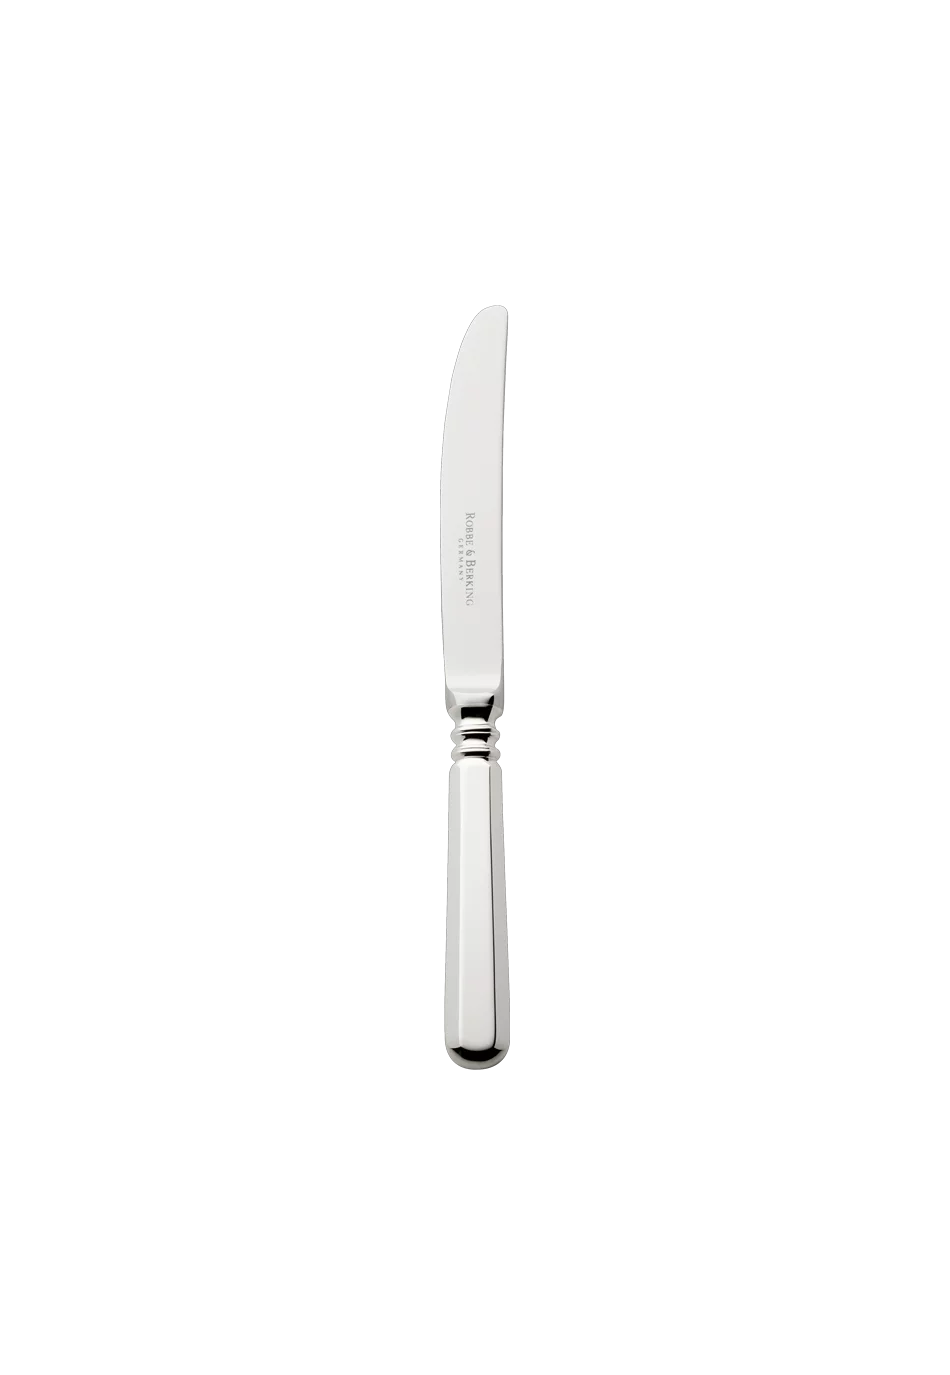 Alt-Spaten Children's Knife (150g massive silverplated)